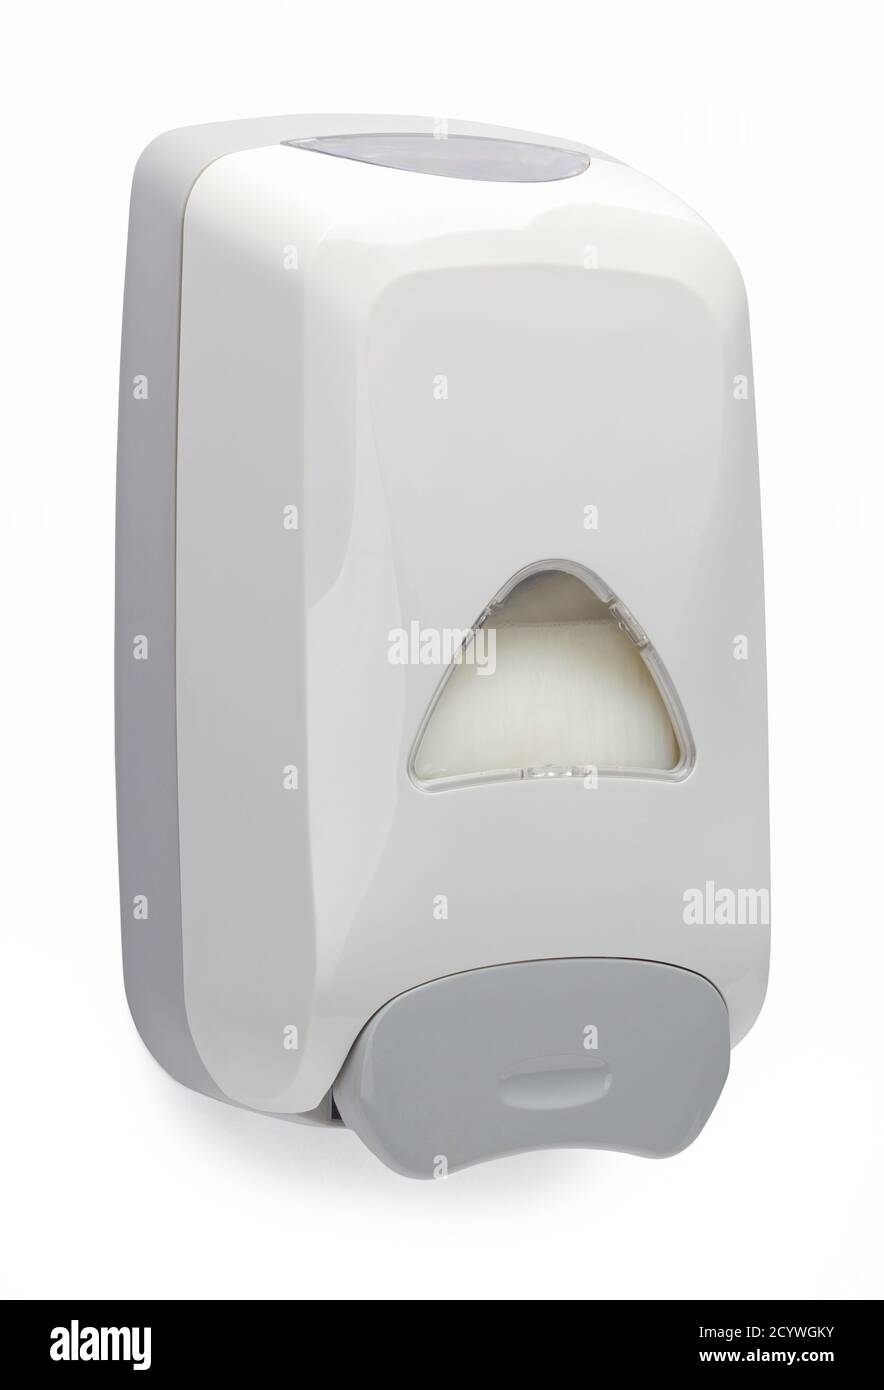 Commercial Bathroom Soap Dispenser Isolated on White. Stock Photo